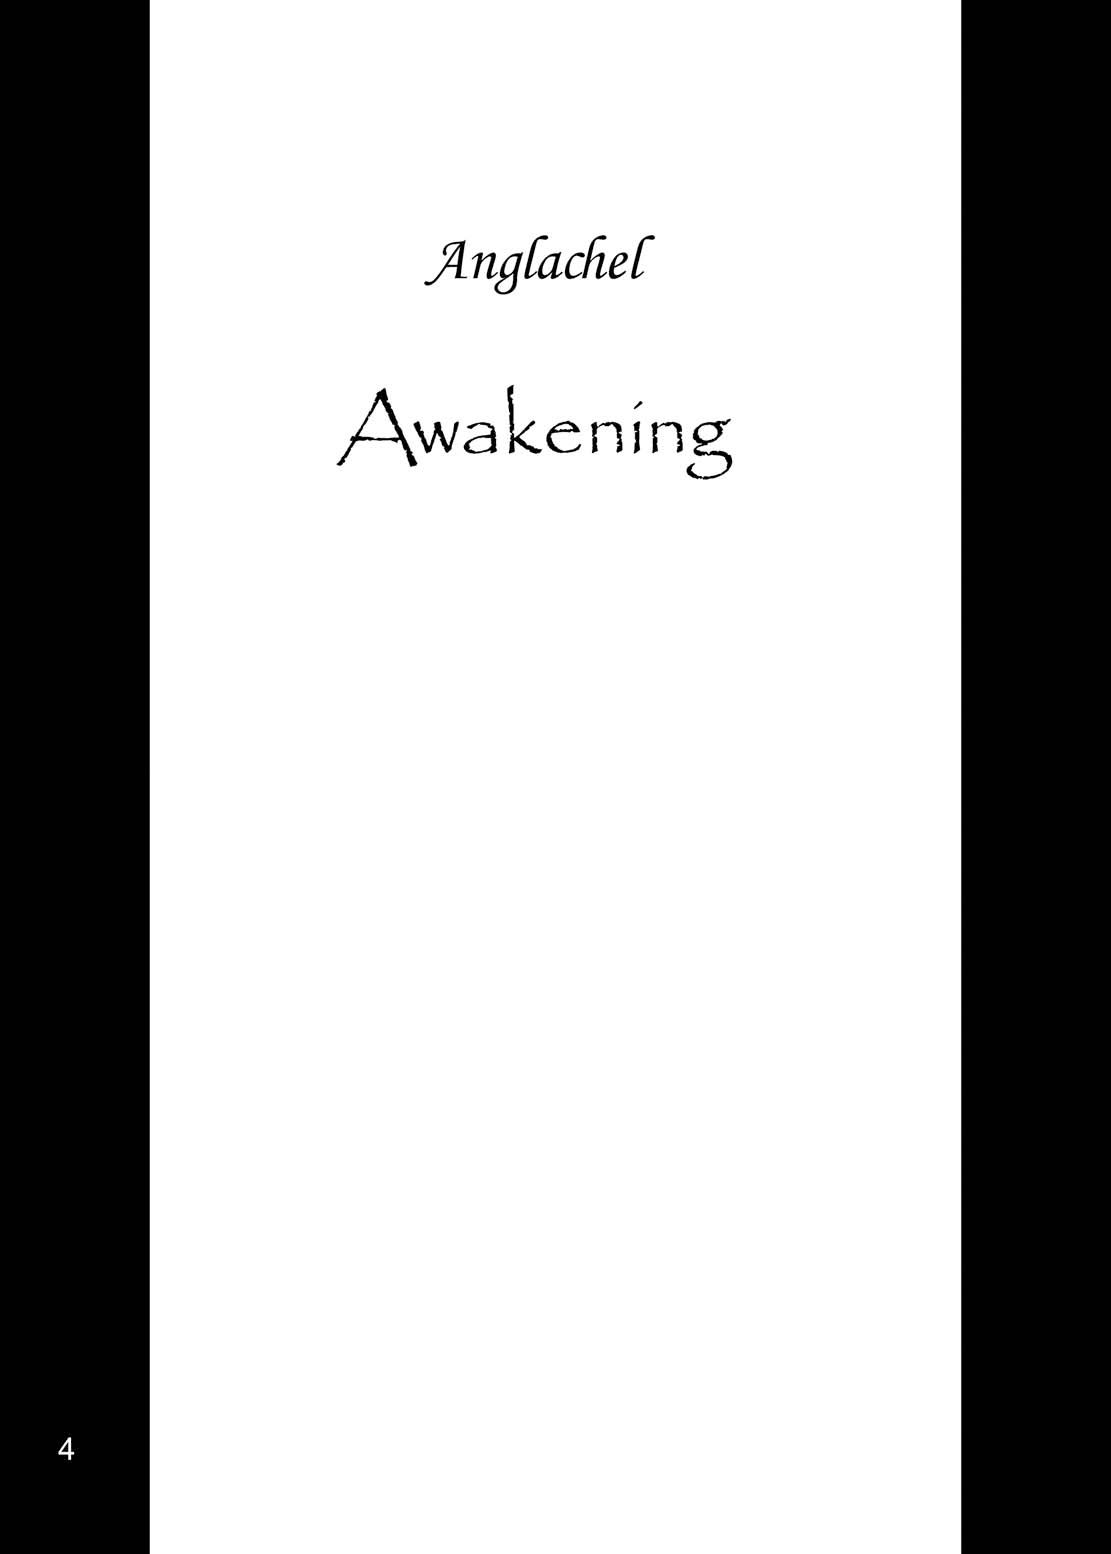 [Anglachel] Awakening1 